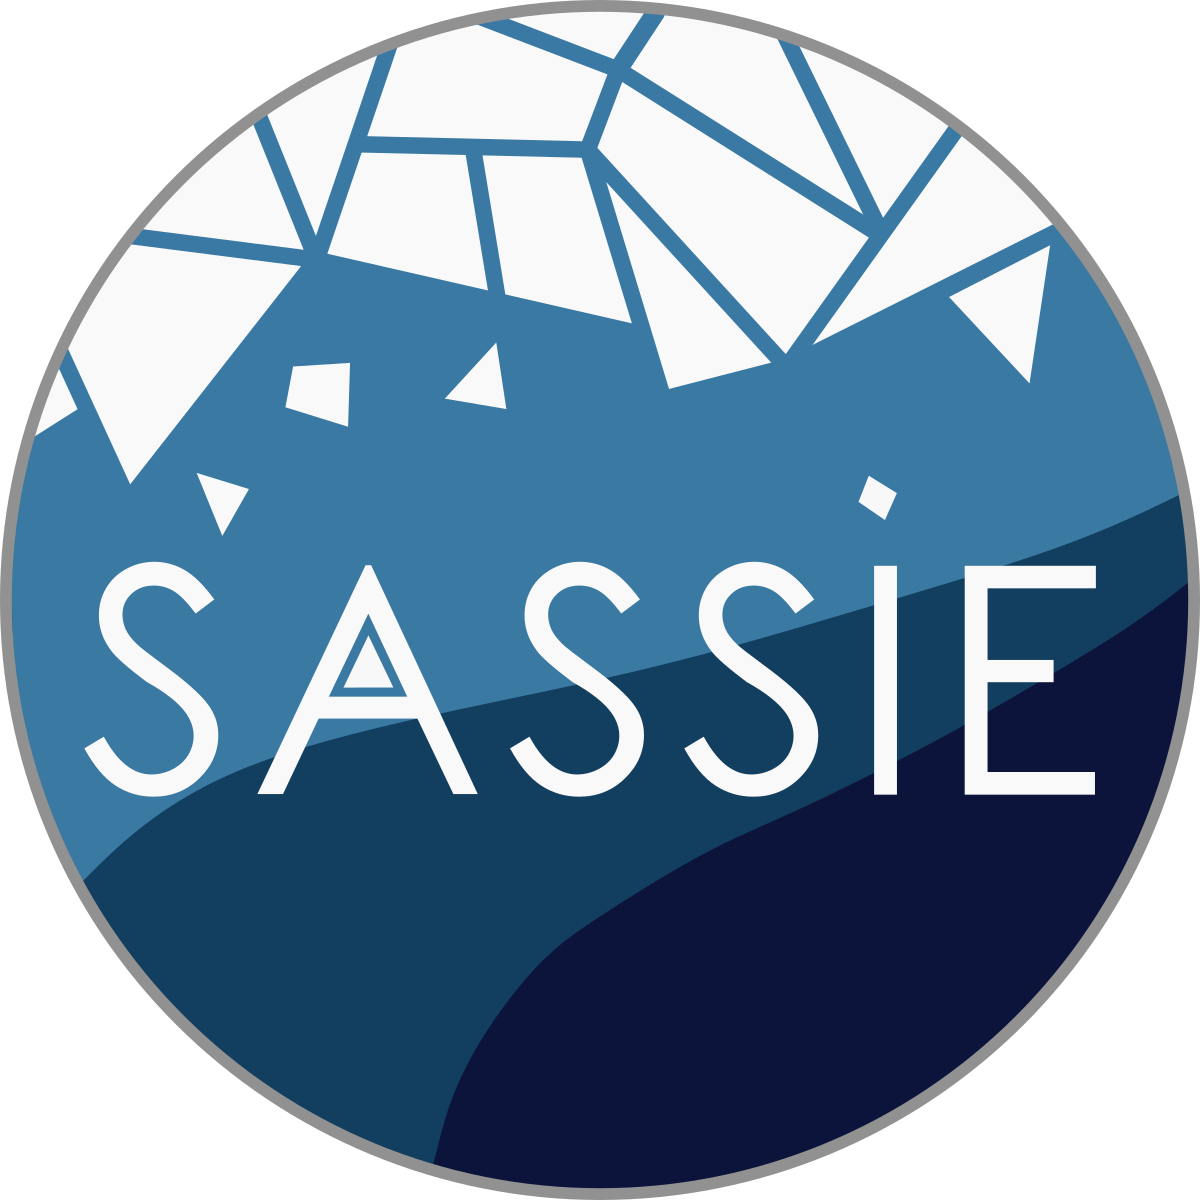 SASSIE logo